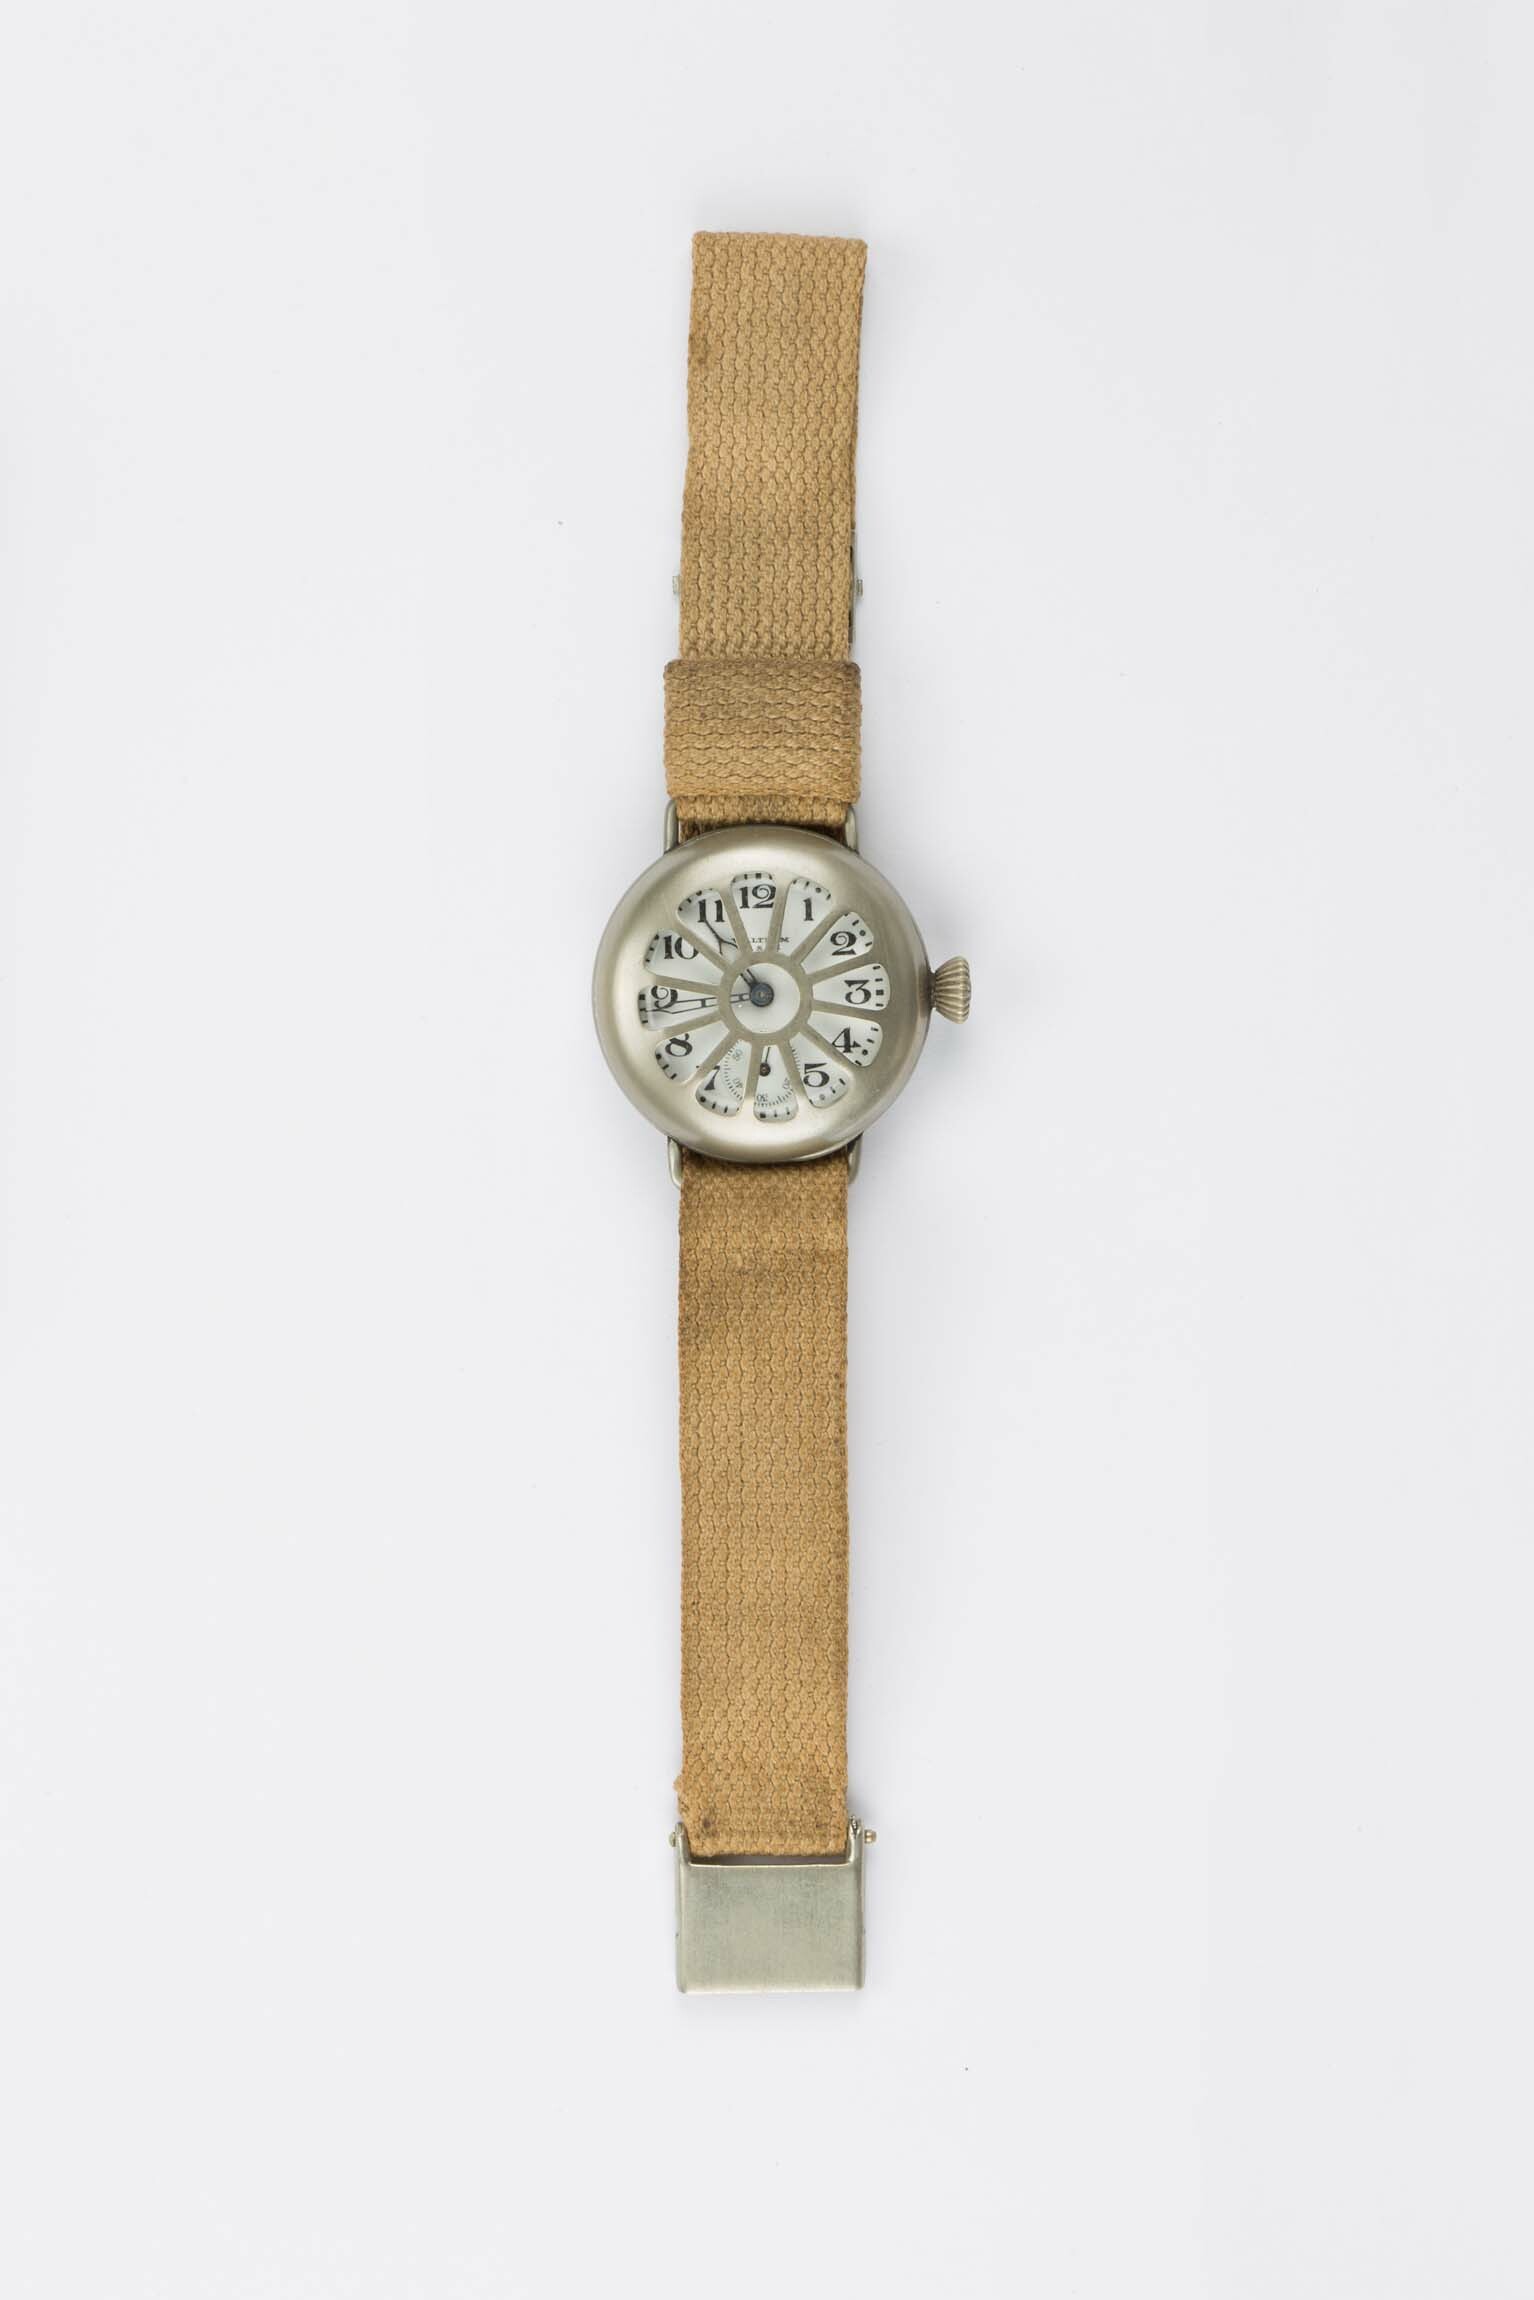 Armbanduhr Waltham, Waltham (USA), 1921 (Deutsches Uhrenmuseum CC BY-SA)